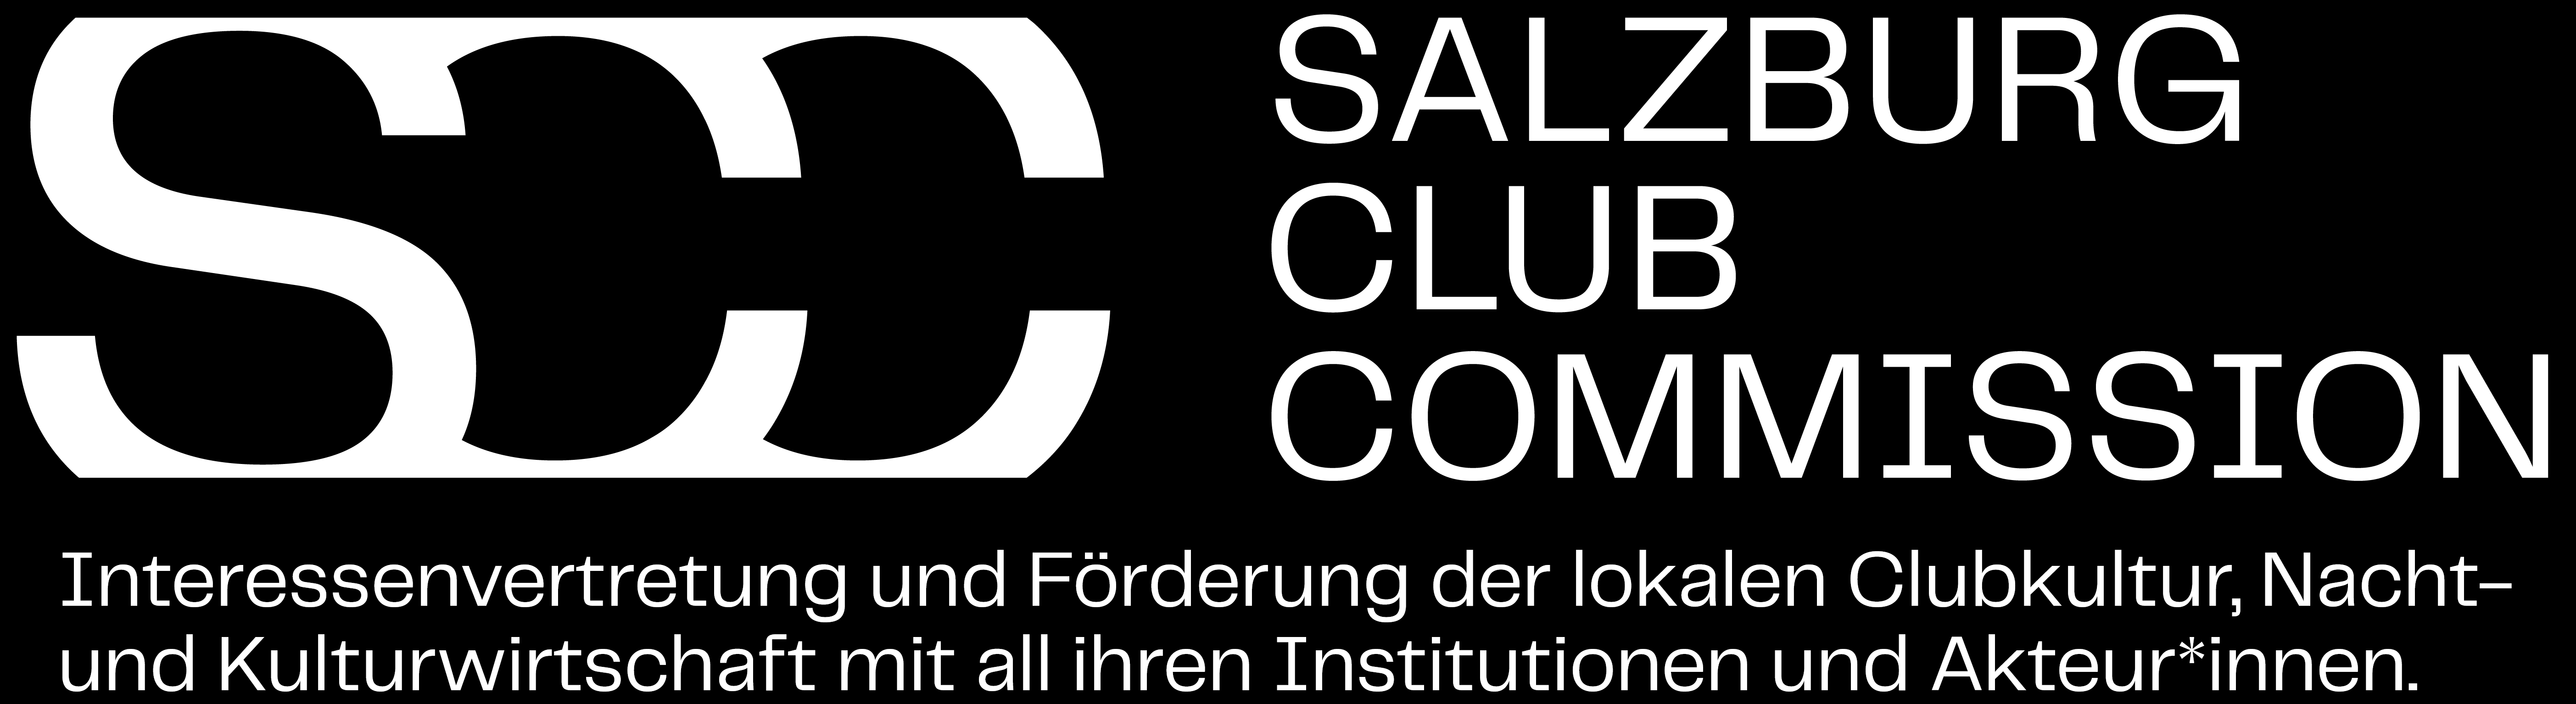 Salzburg Club Commission